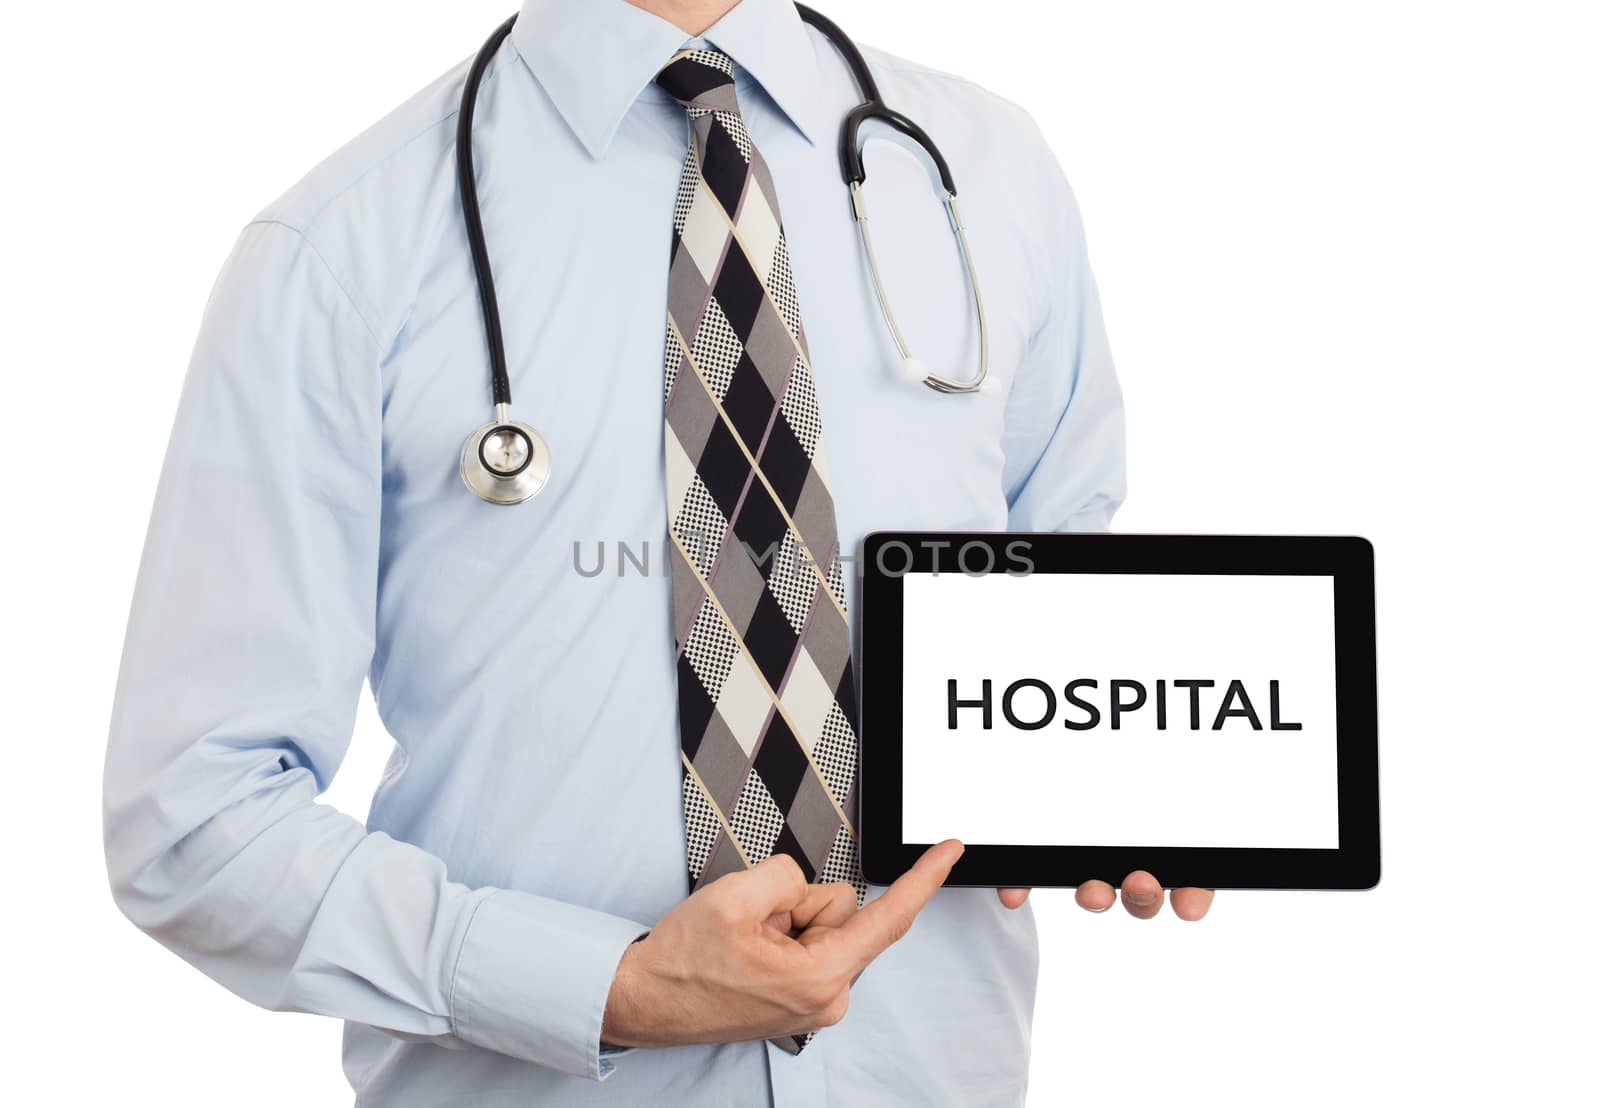 Doctor, isolated on white backgroun,  holding digital tablet - Hospital